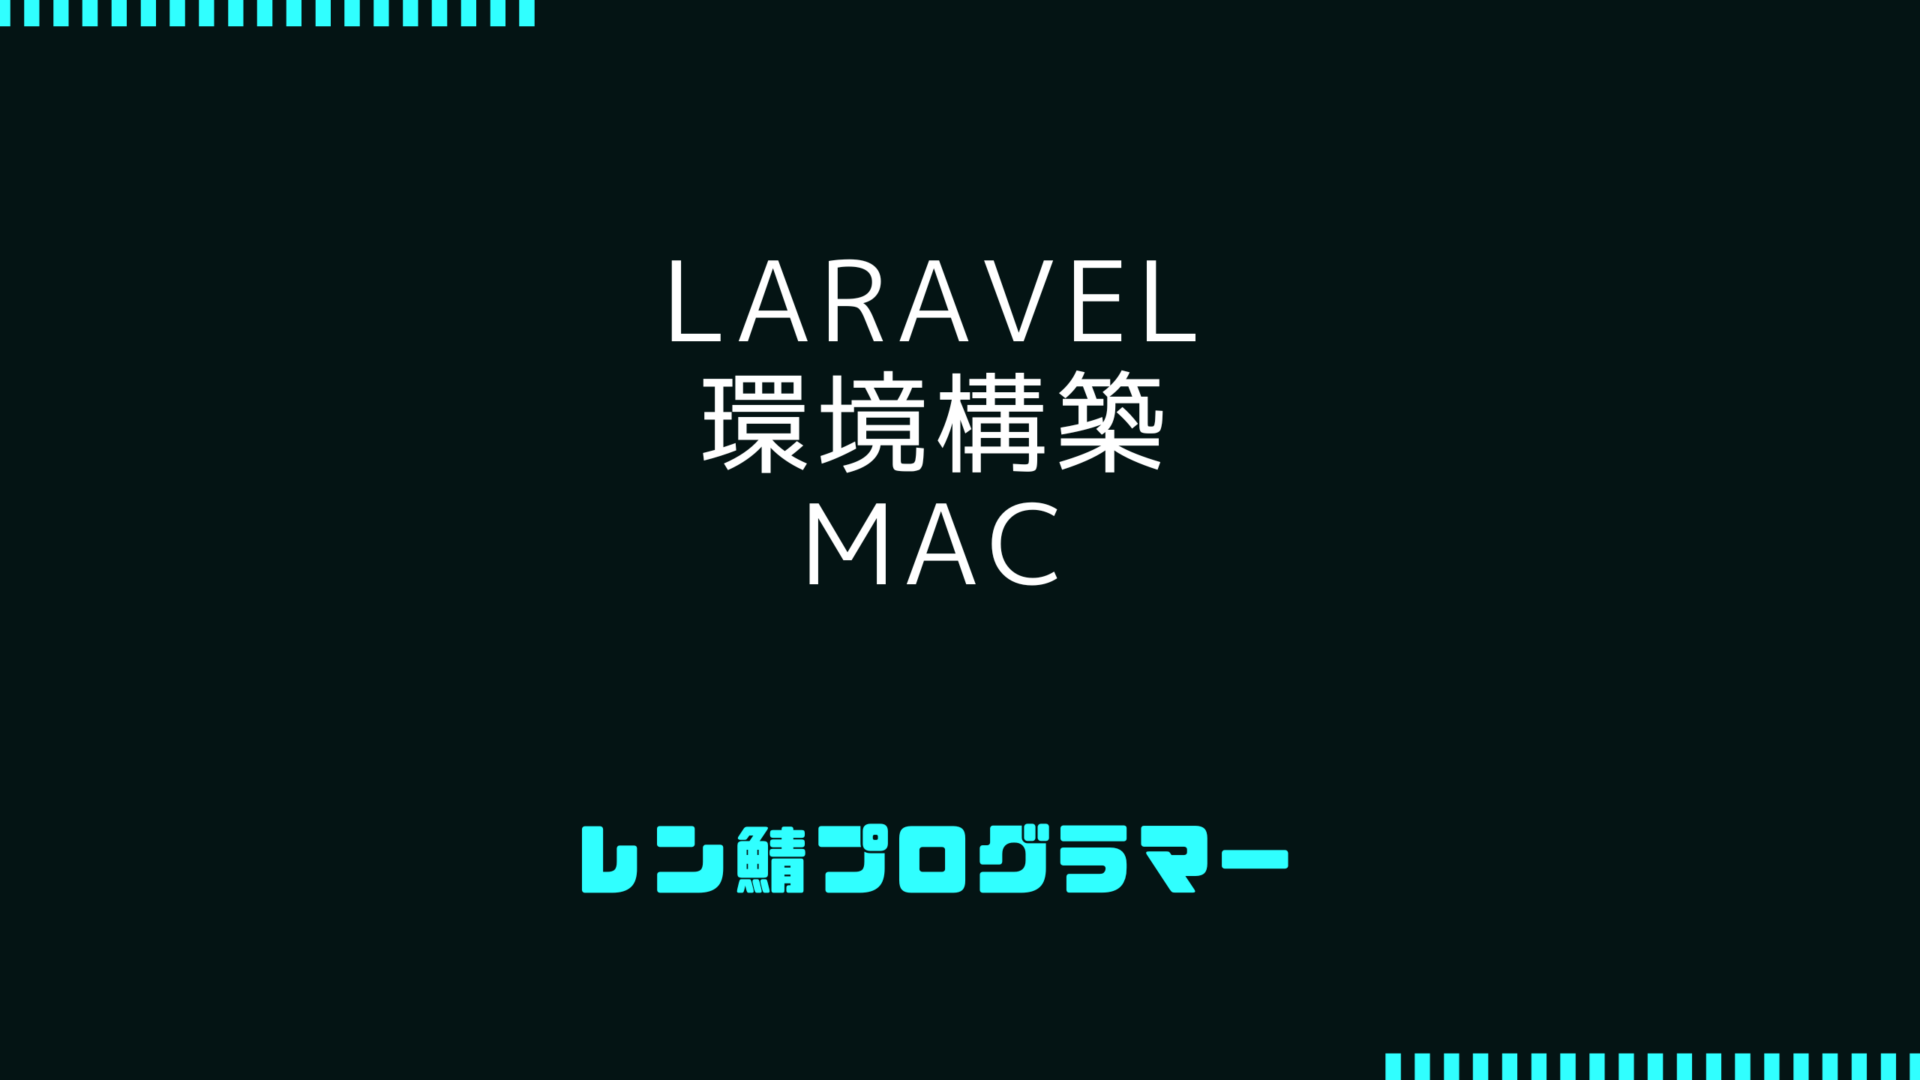 LaravelをMacで環境構築するならHerdがおすすめ